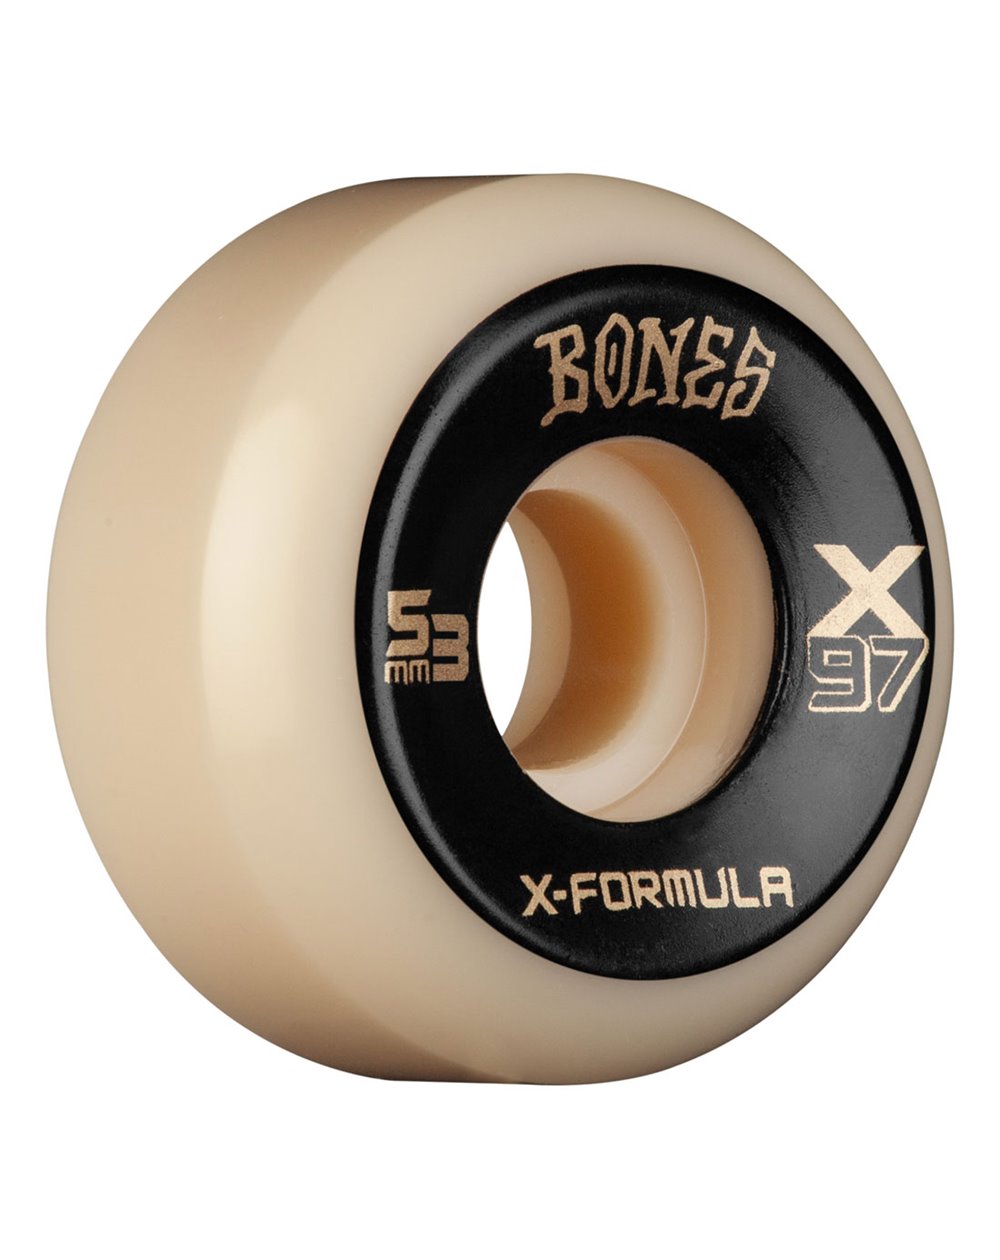 Bones Wheels Rodas Skate X-Formula V5 Sidecut X-Ninety-Seven 53mm 97A 4 peças